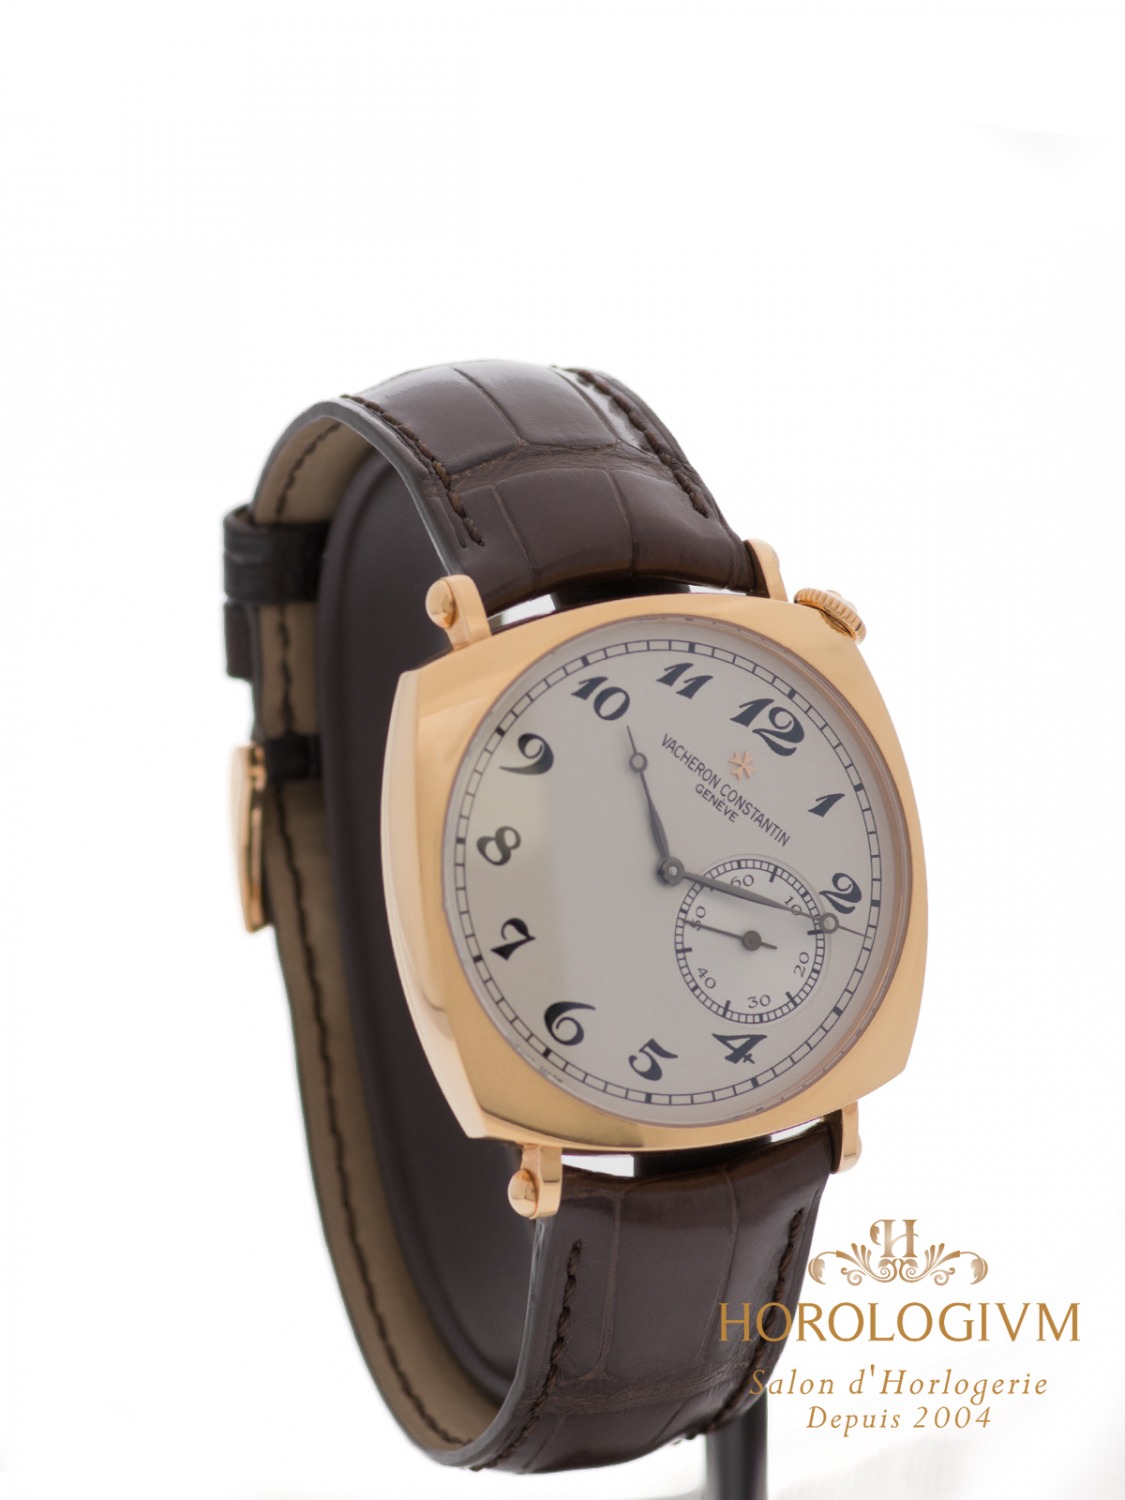 Vacheron Constantin Historiques American 1921 Ref. 82035/000R-9359 watch, rose gold